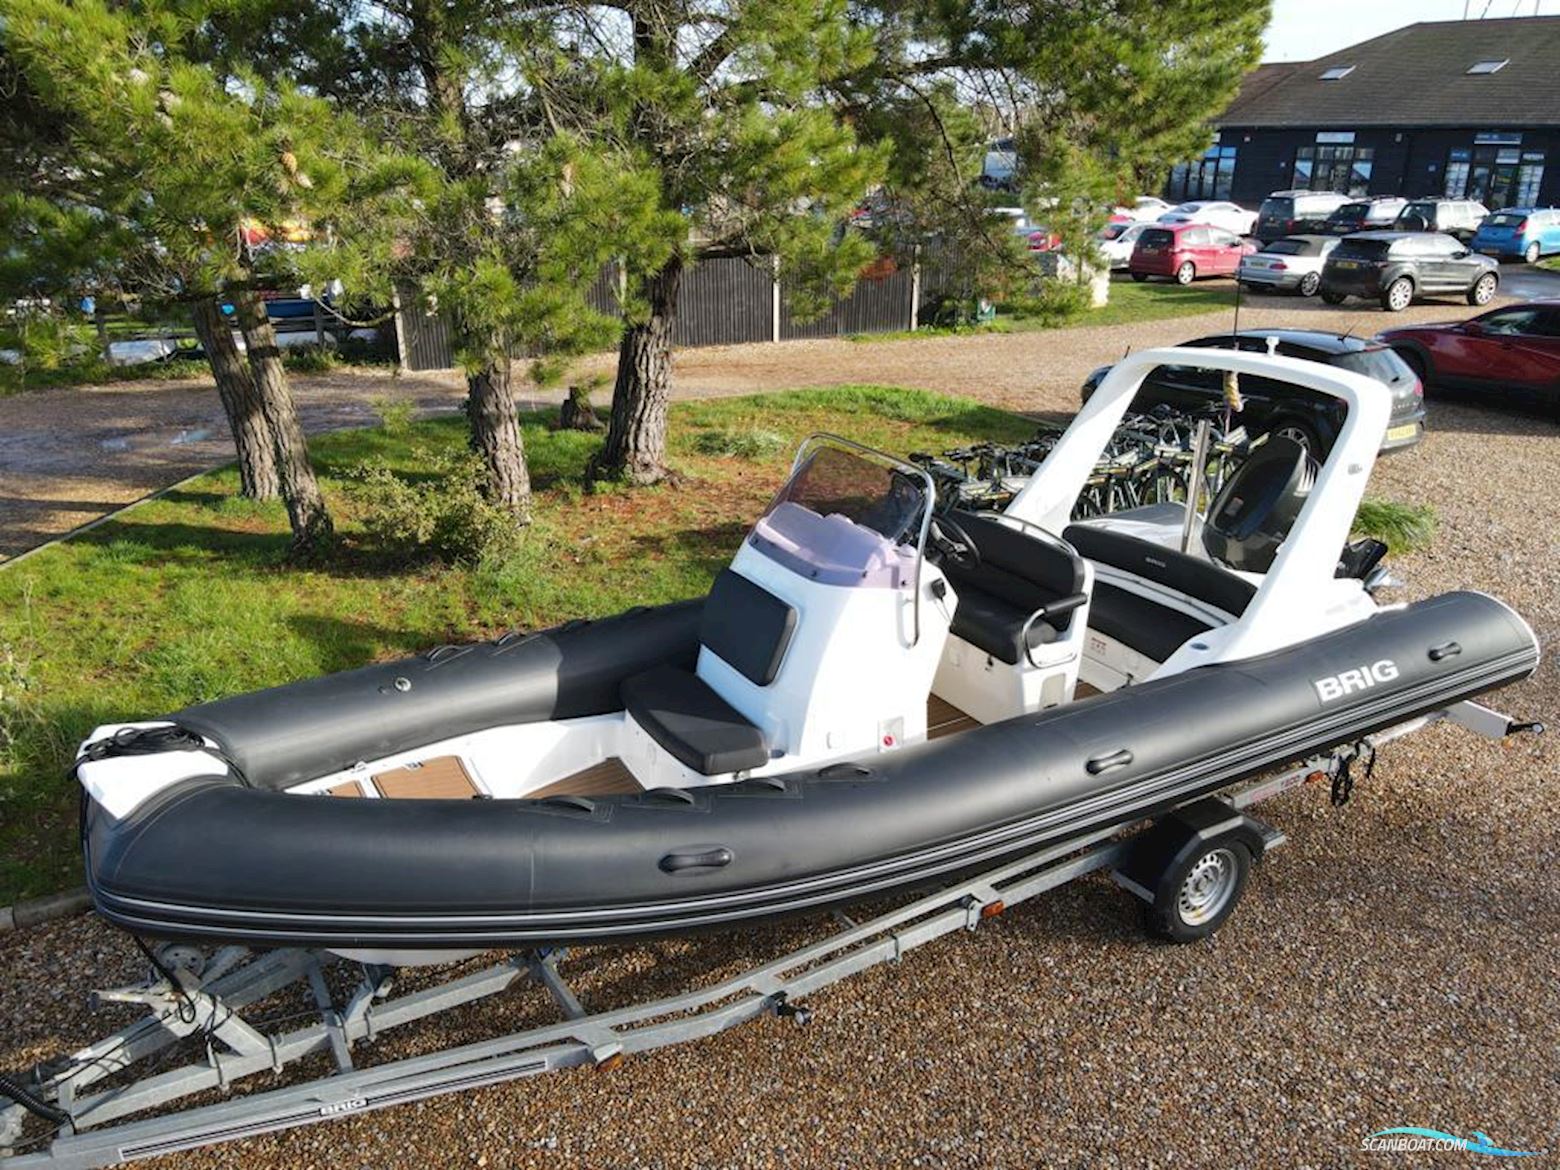 Brig Ribs Eagle 650 Schlauchboot / Rib 2019, mit Suzuki motor, England